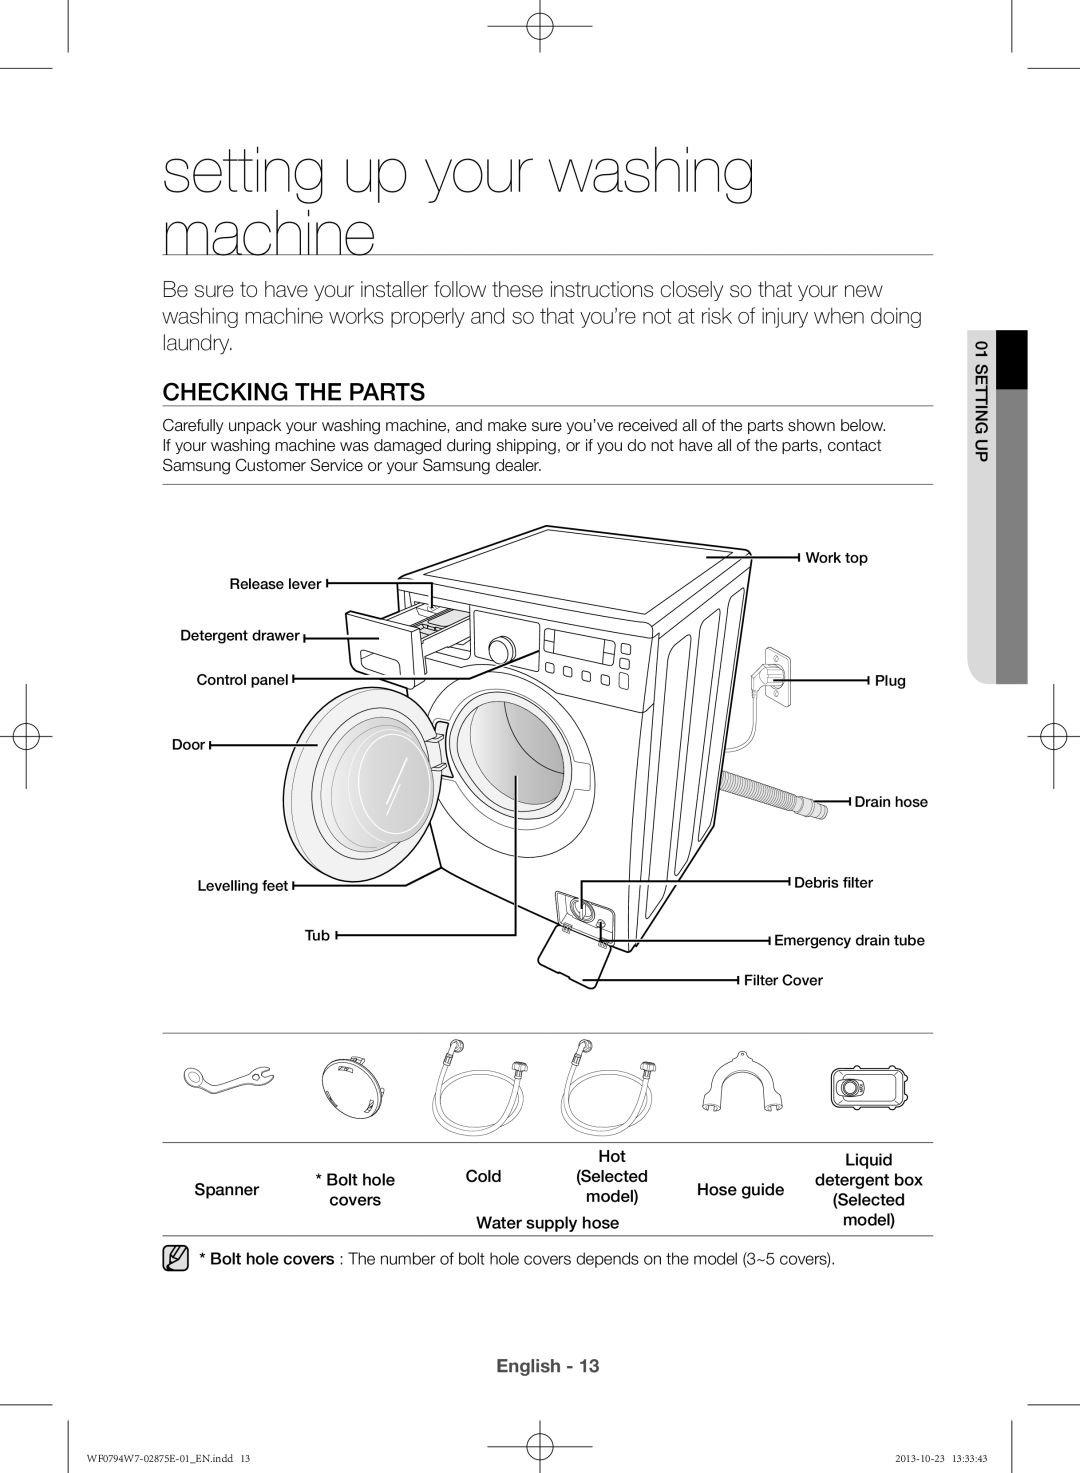 Samsung WF0794W7E9/XSV manual setting up your washing machine, Checking the parts, English 